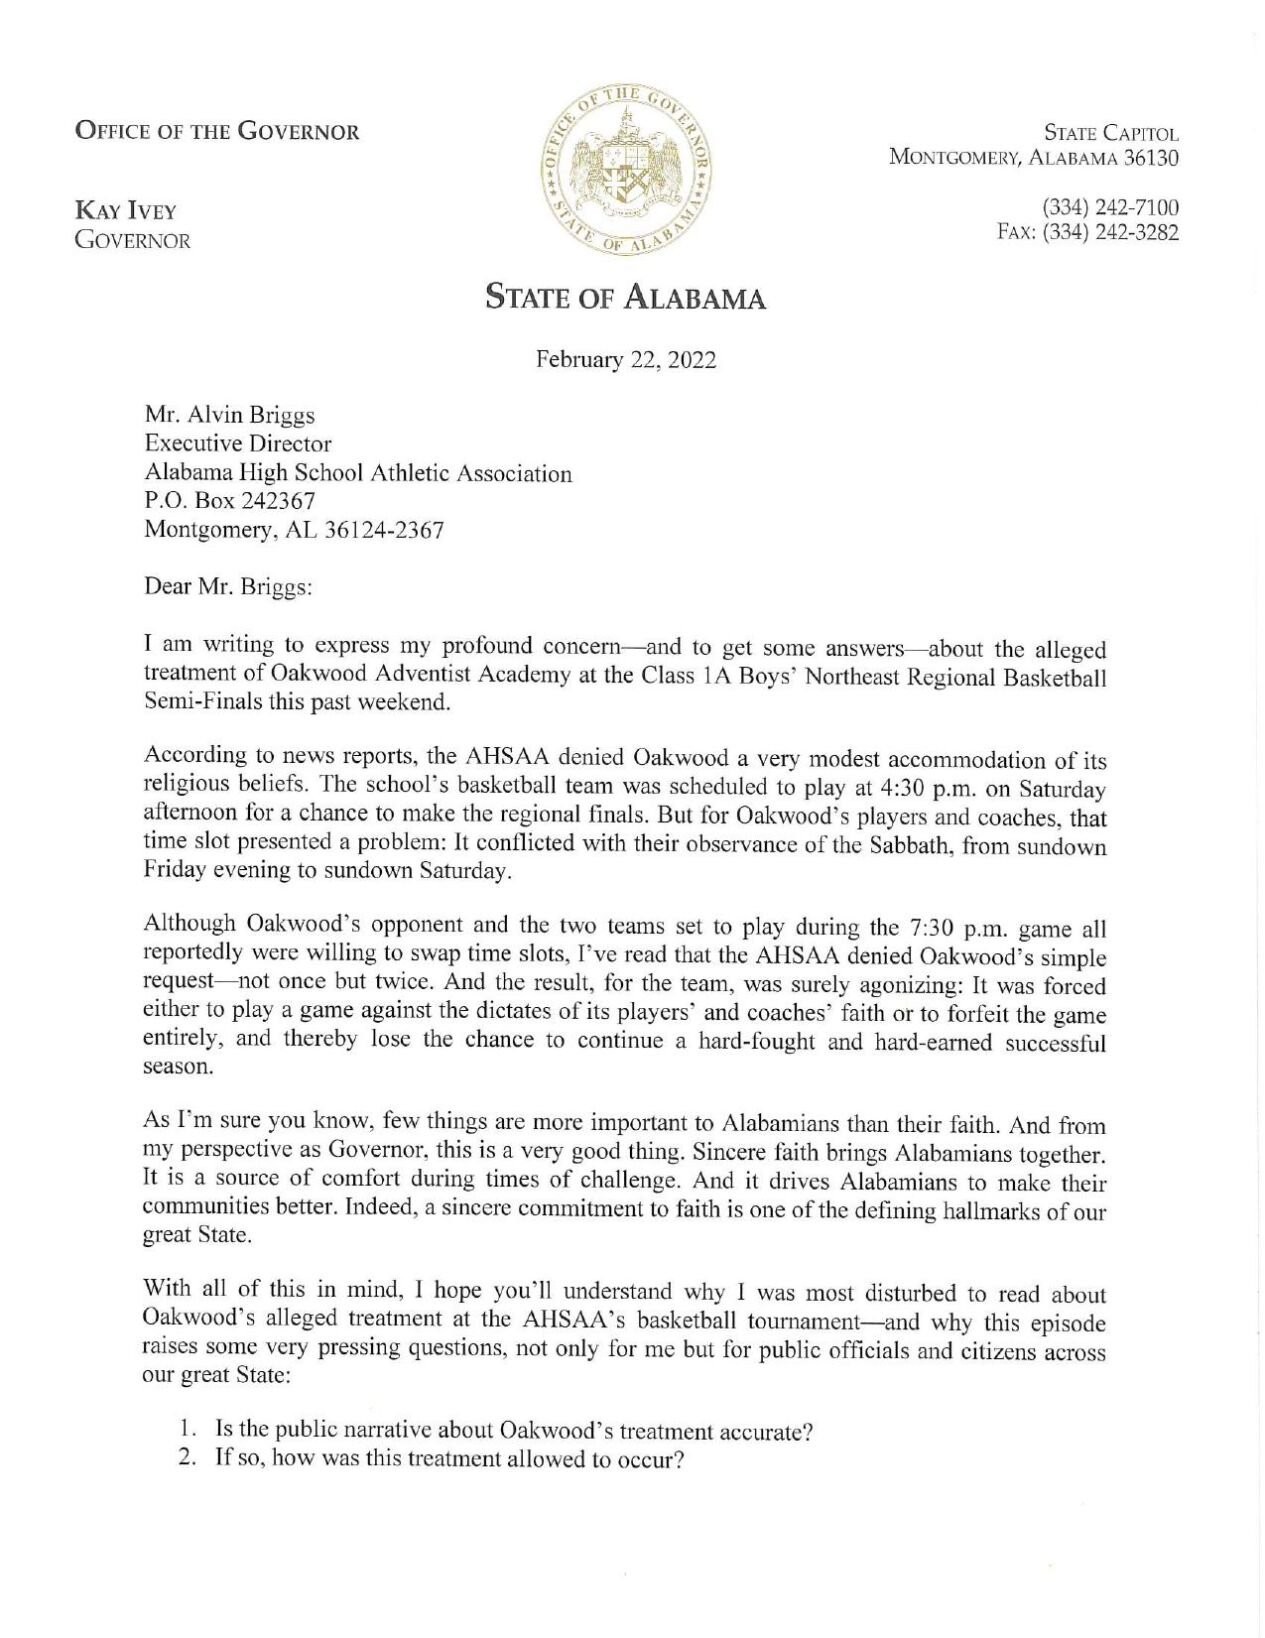 Gov. Kay Ivey letter to Alabama High School Athletic Association